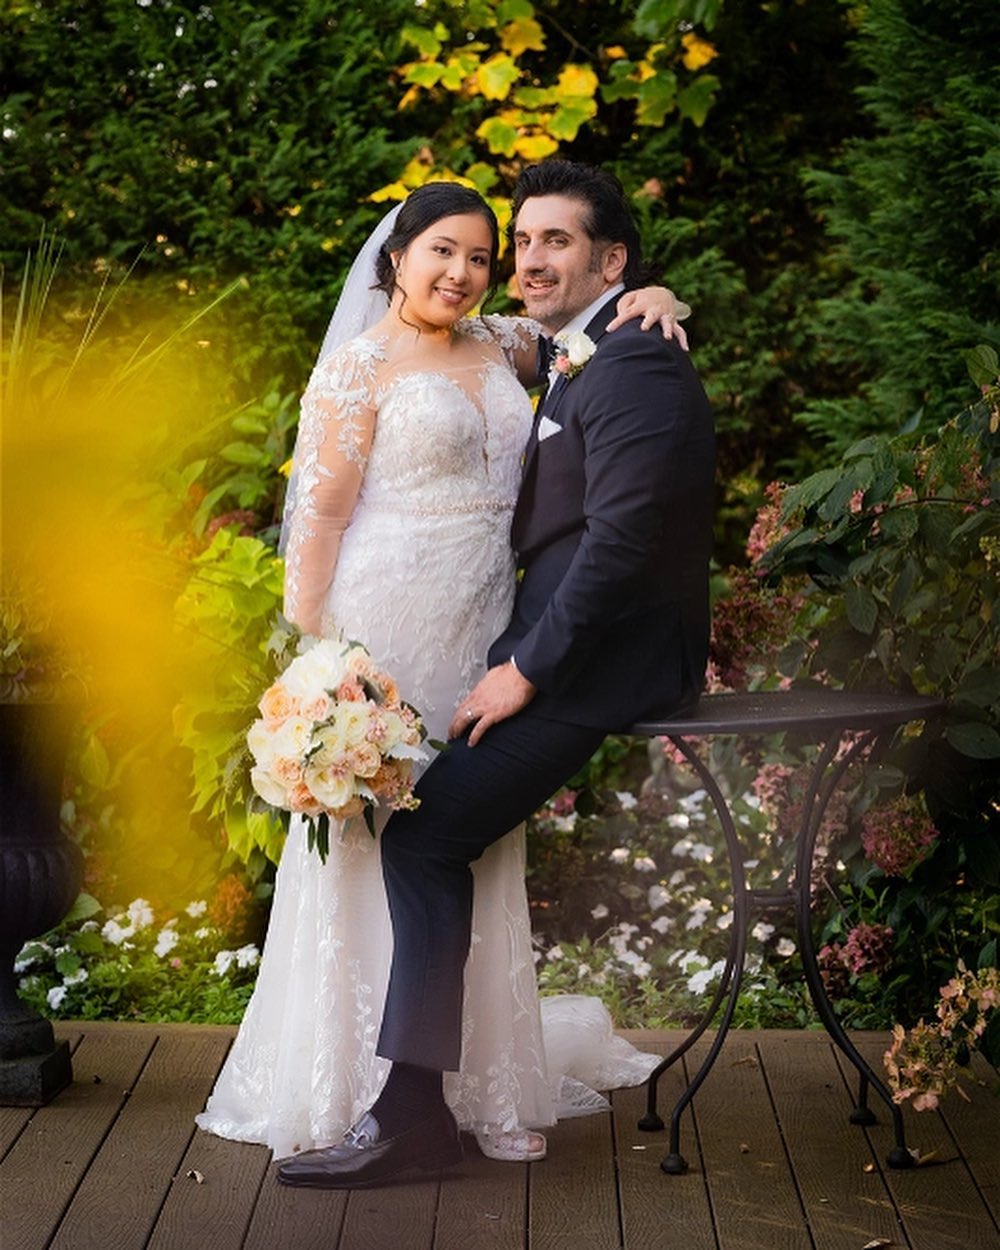 5 Reasons Why You Should Consider Choosing A Garden Wedding Venue